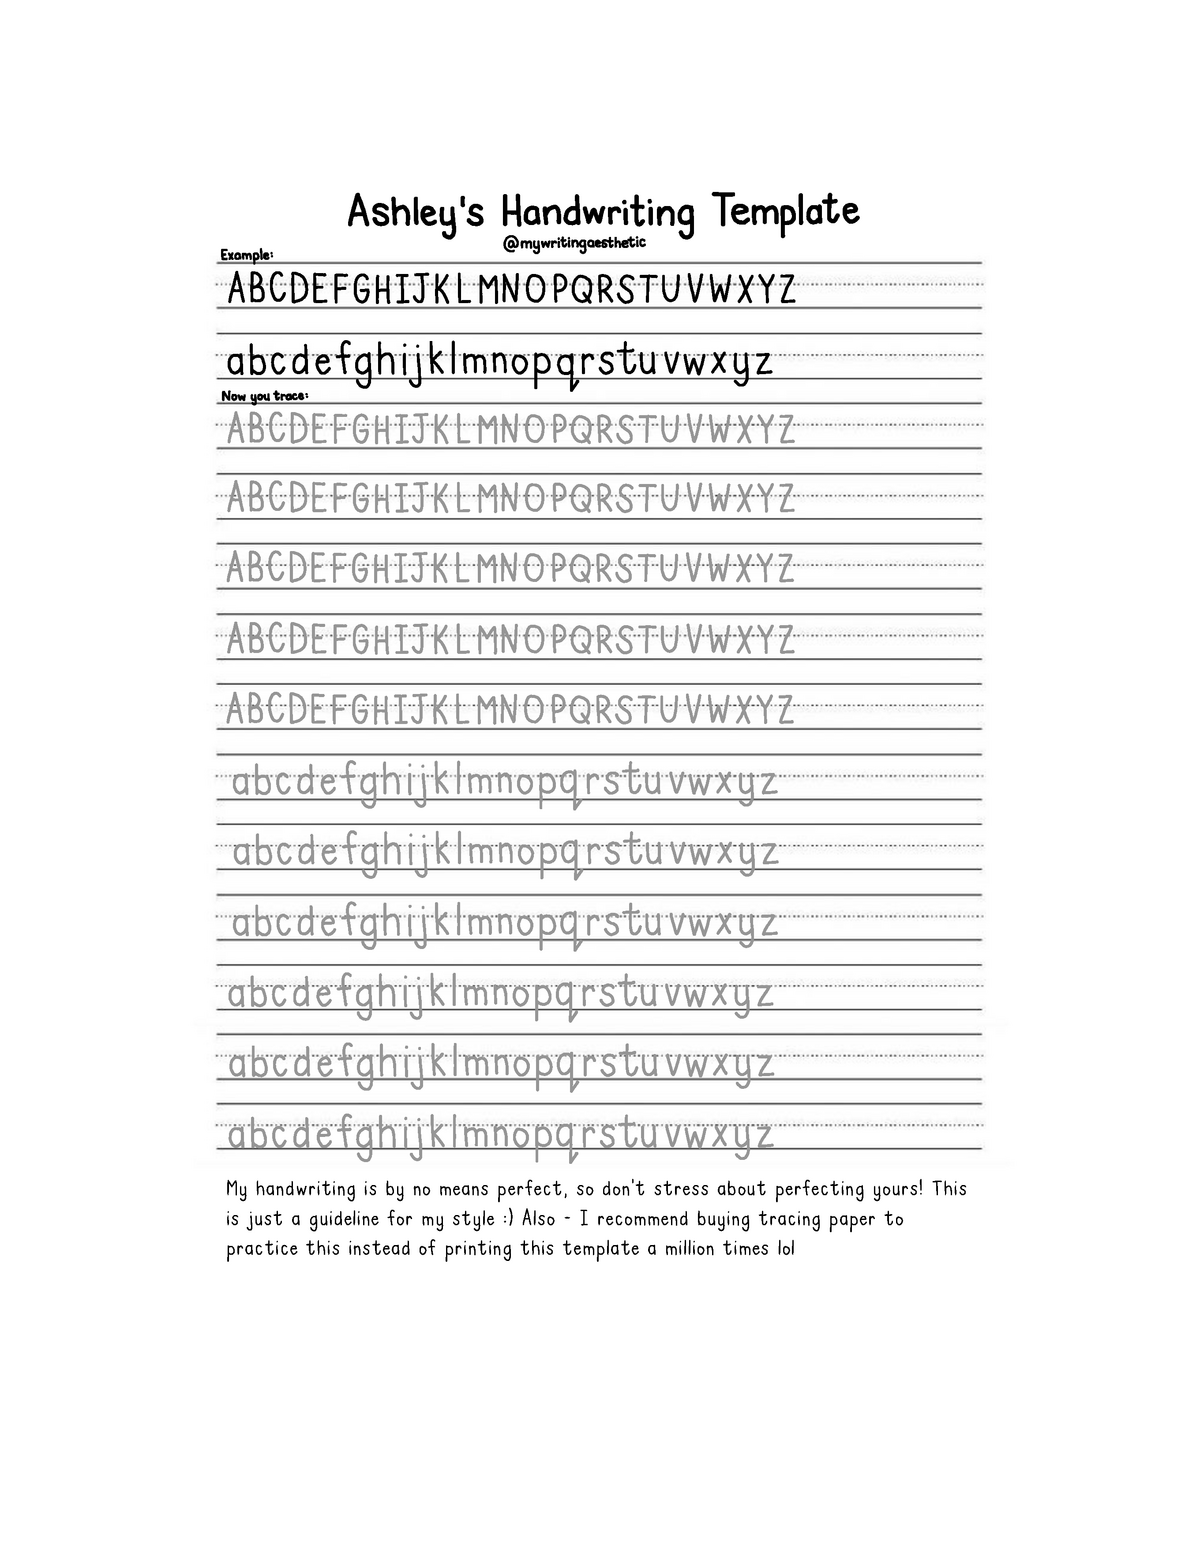 Handwriting Template 2034 Ashley sHandwritingTe m p l a t e Example